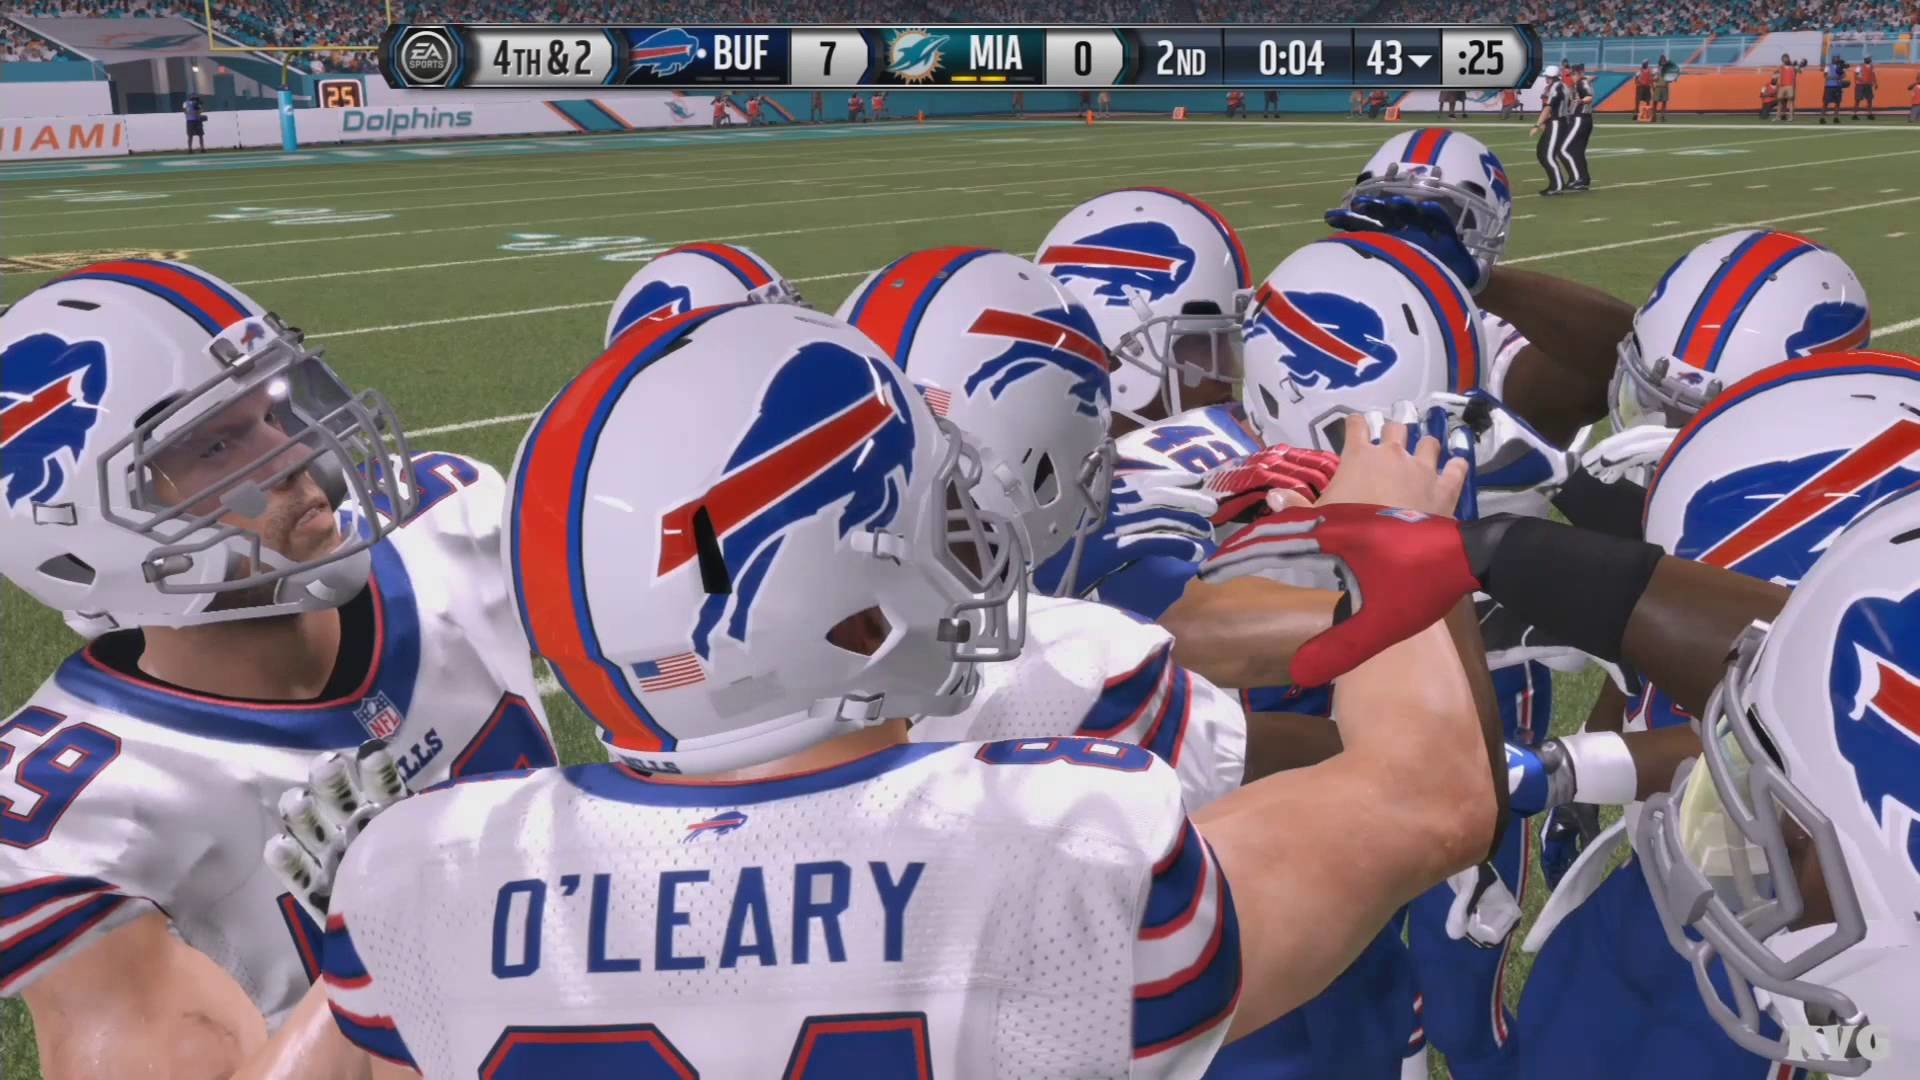 Madden NFL 16 – Buffalo Bills vs Miami Dolphins Gameplay XboxONE HD 1080p